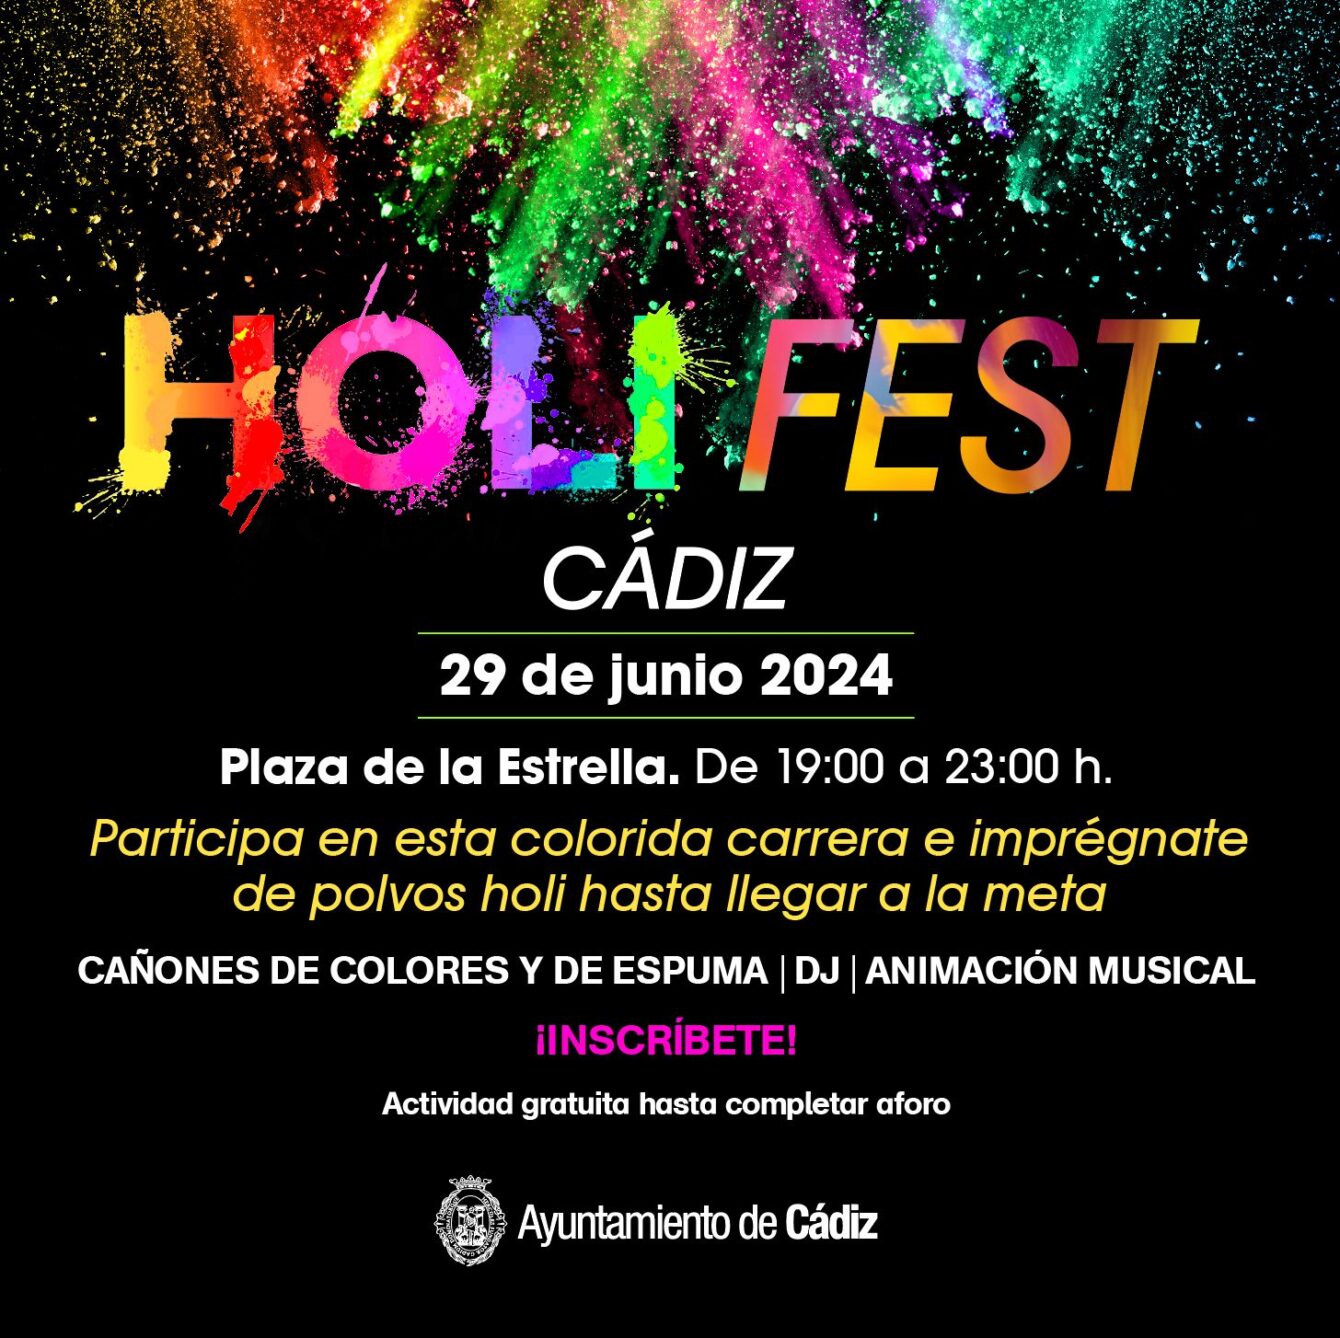 HoliFest